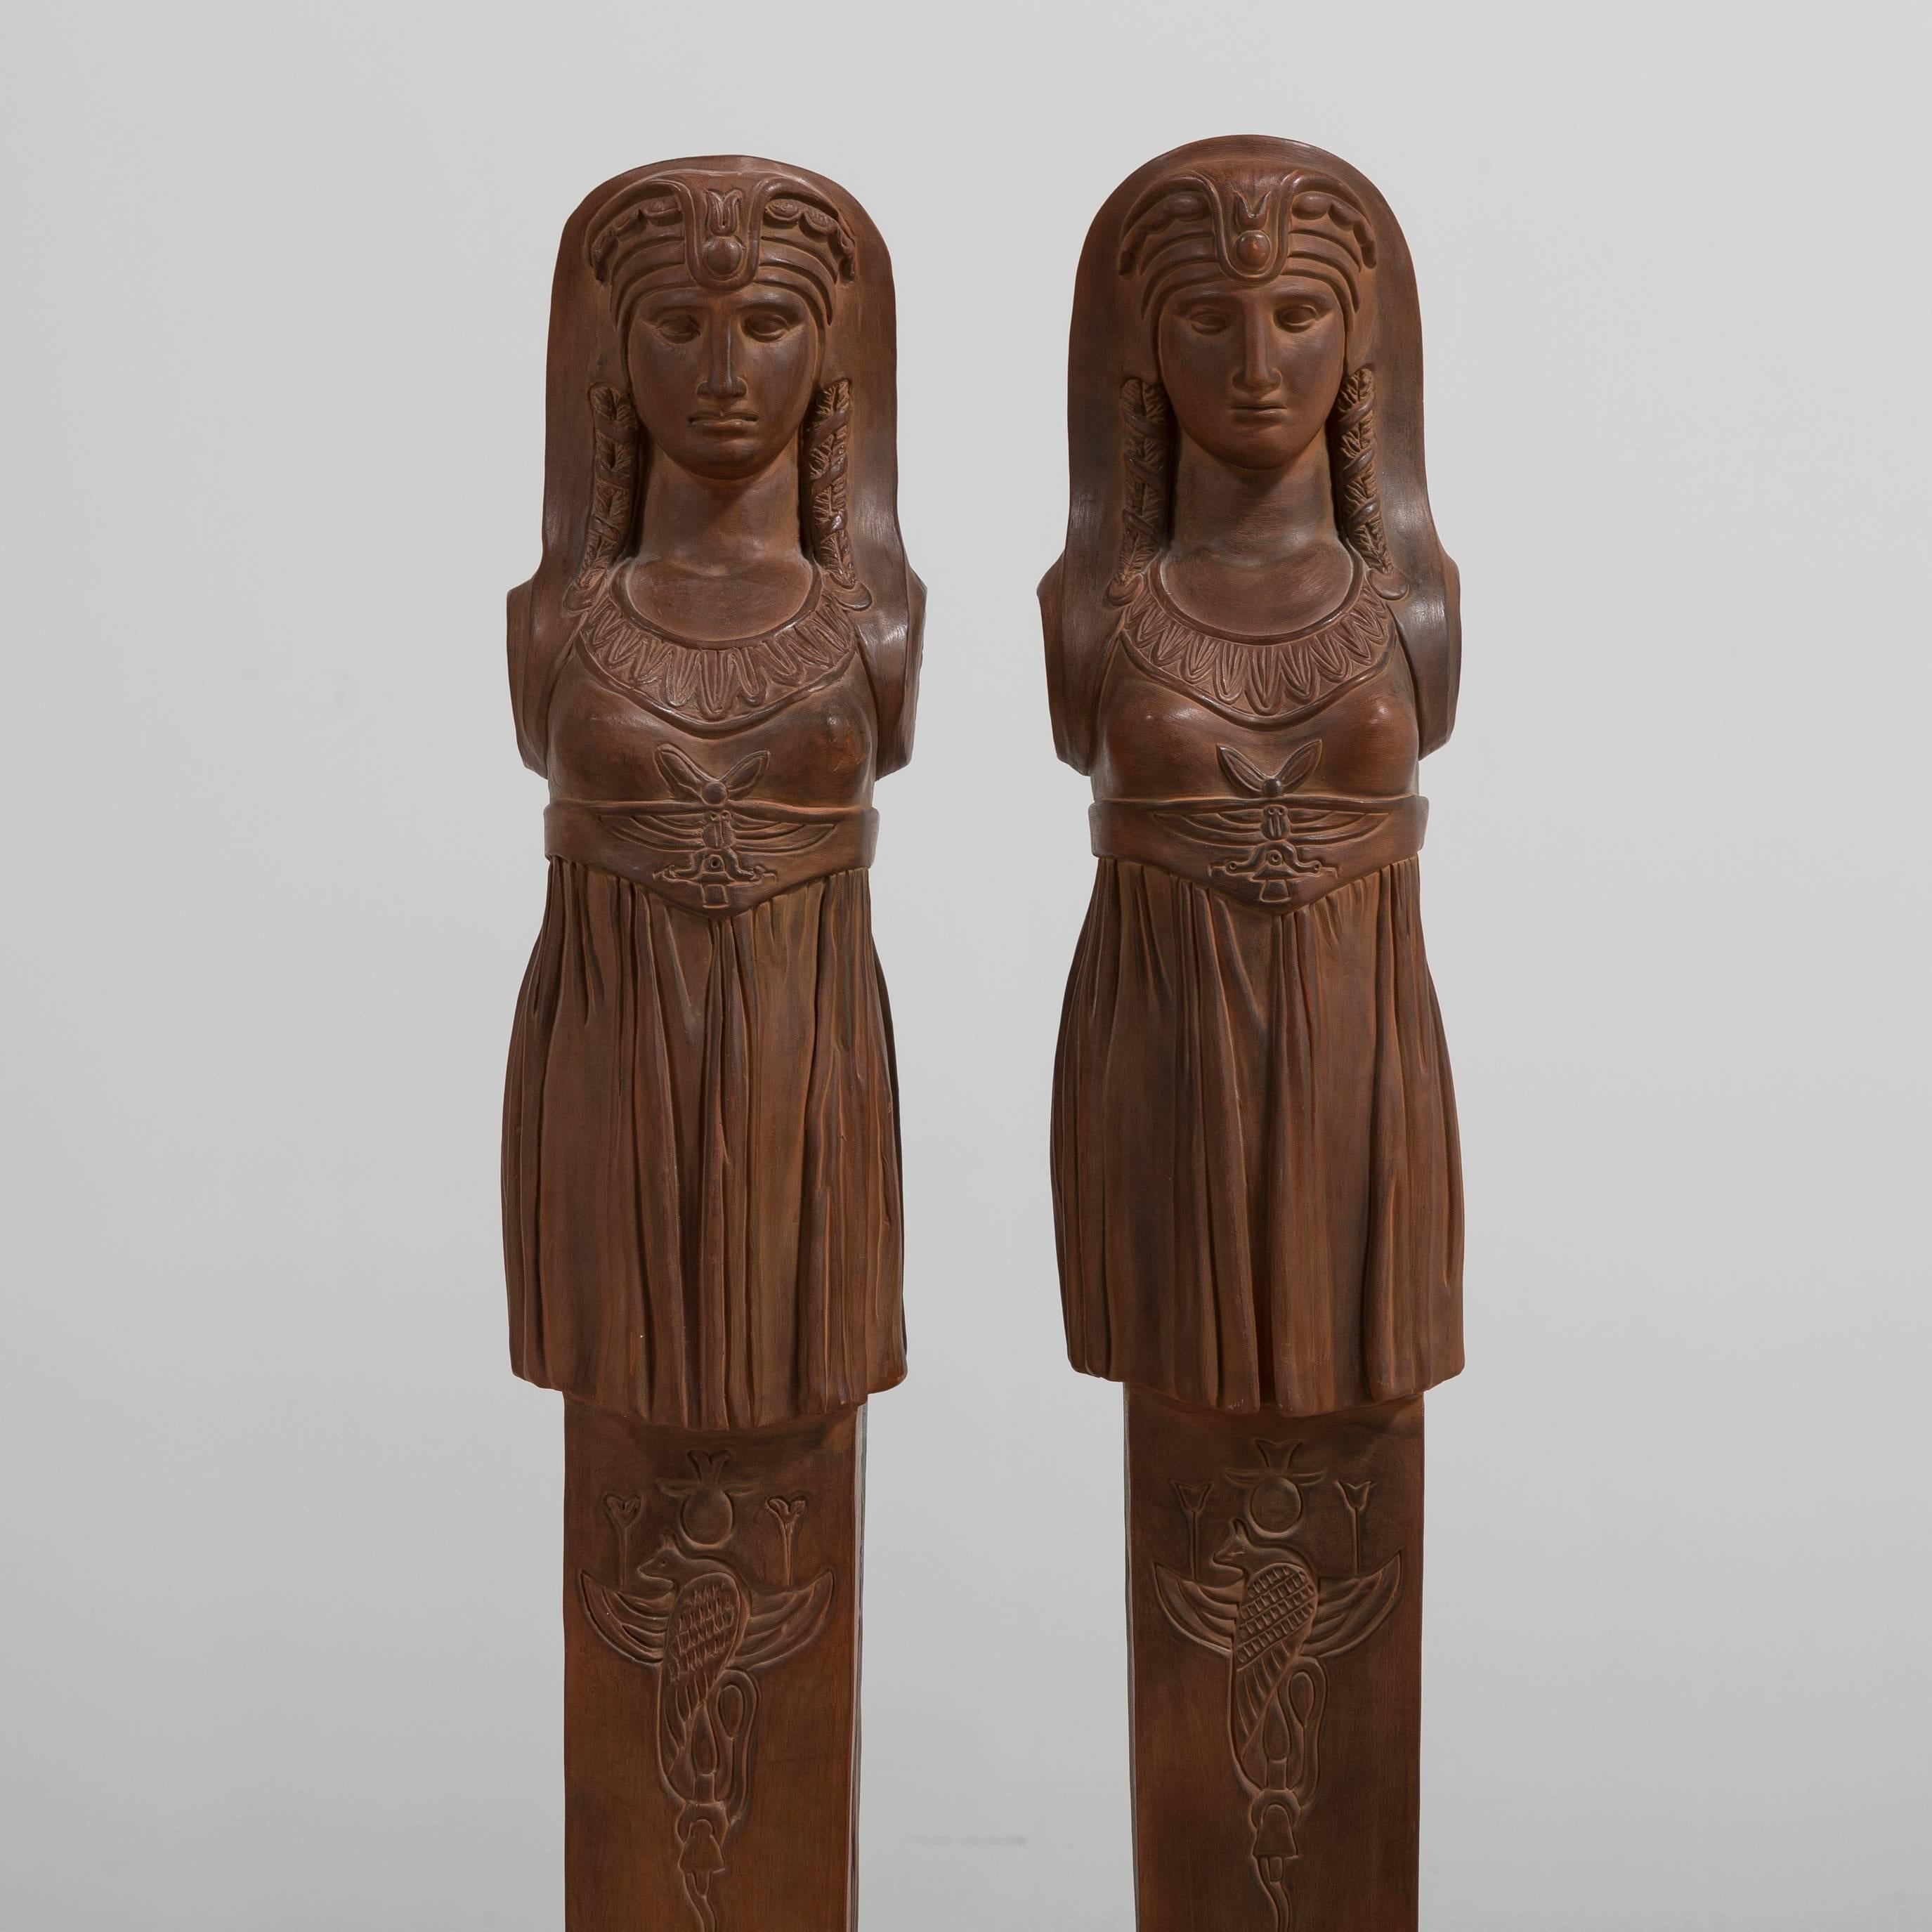 A pair of terracotta term figures, circa 1980
